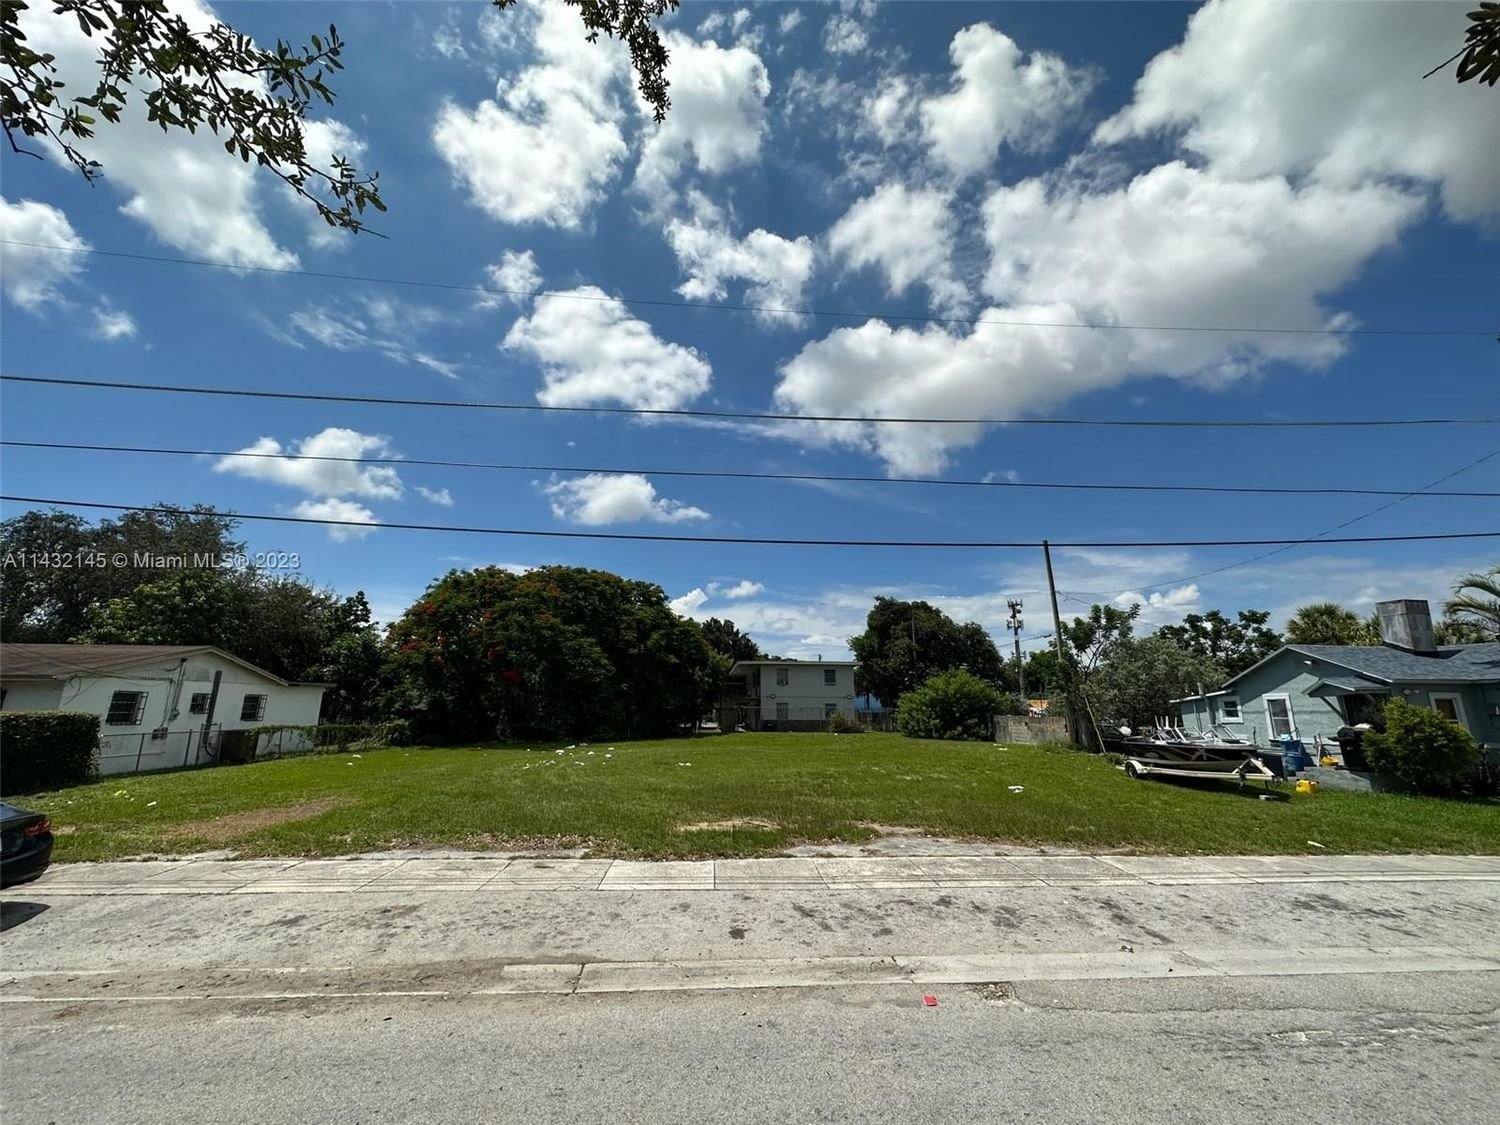 Real estate property located at 1624 60th St, Miami-Dade County, Miami, FL